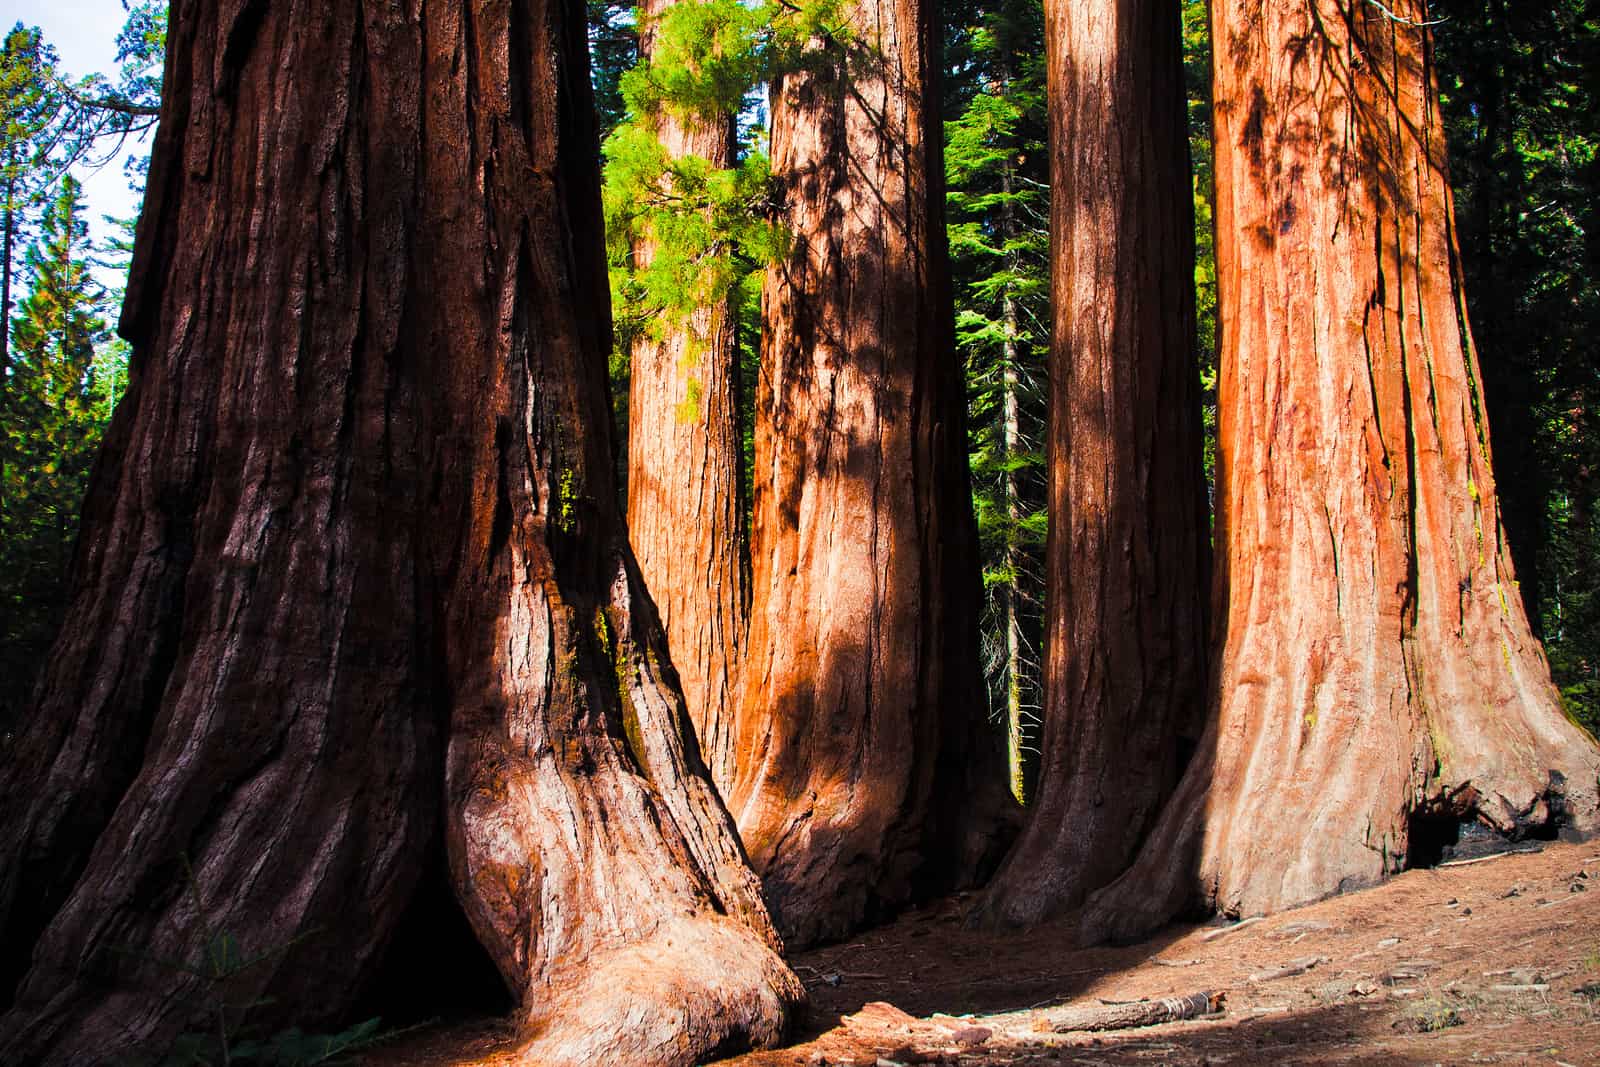 https://theparadigmrealtygroup.com/wp-content/uploads/2017/10/bigstock-Giant-Sequoias-in-Yosemite-Nat-45266944.jpg